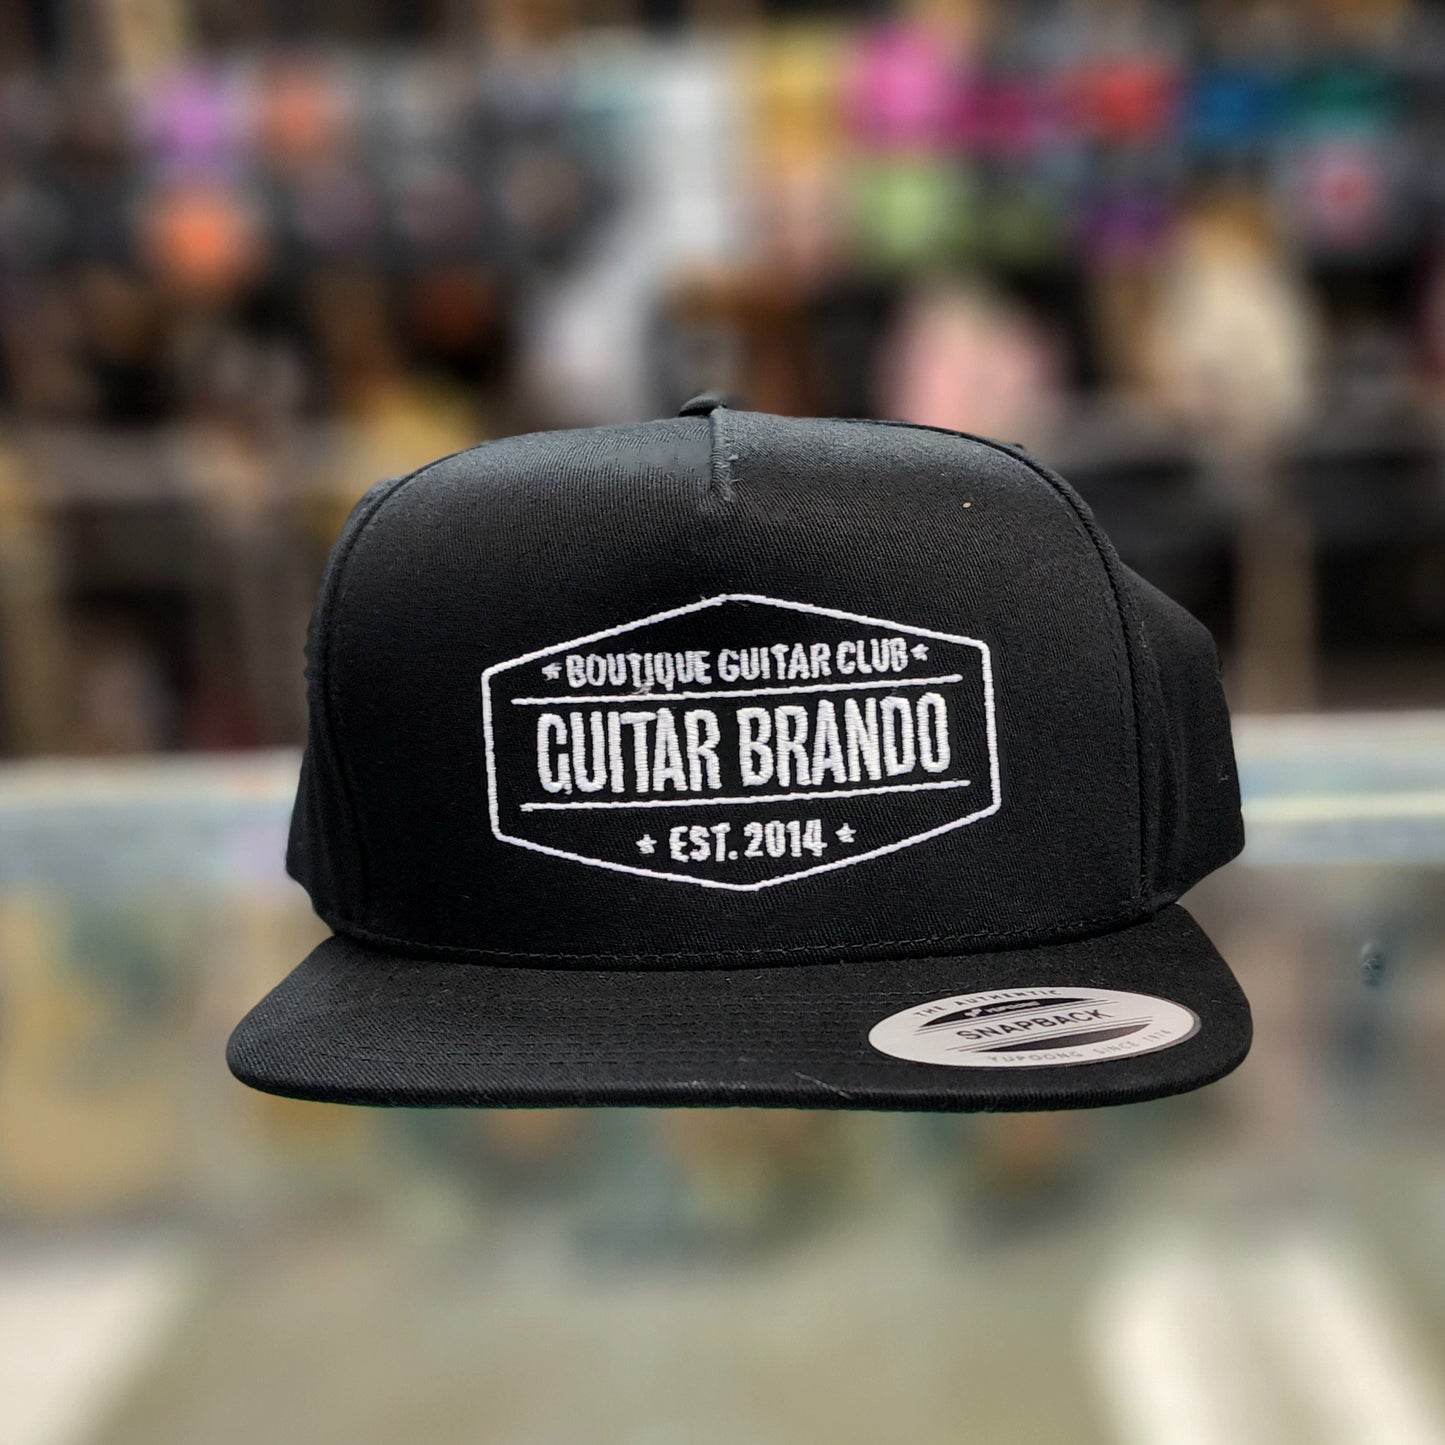 Guitar Brando "Boutique Guitar Club" Snap Back Hat One-Size